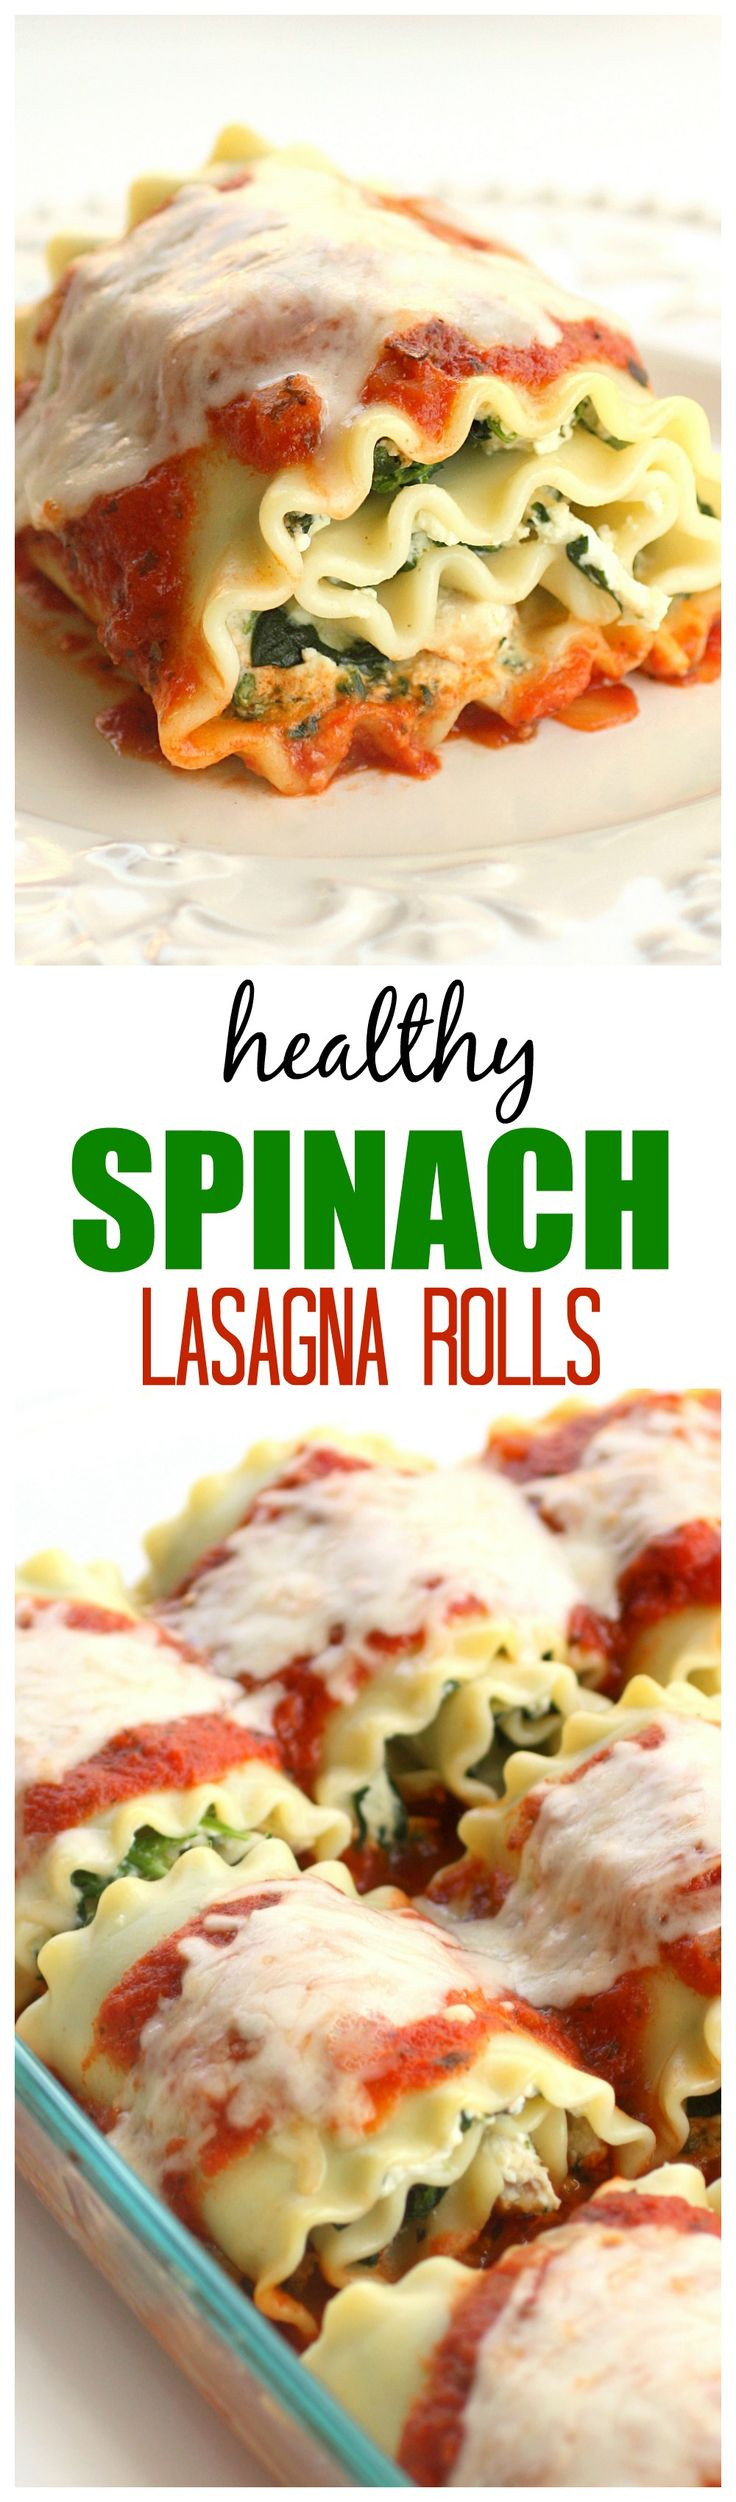 Healthy Lasagna Recipes
 Healthy Recipes